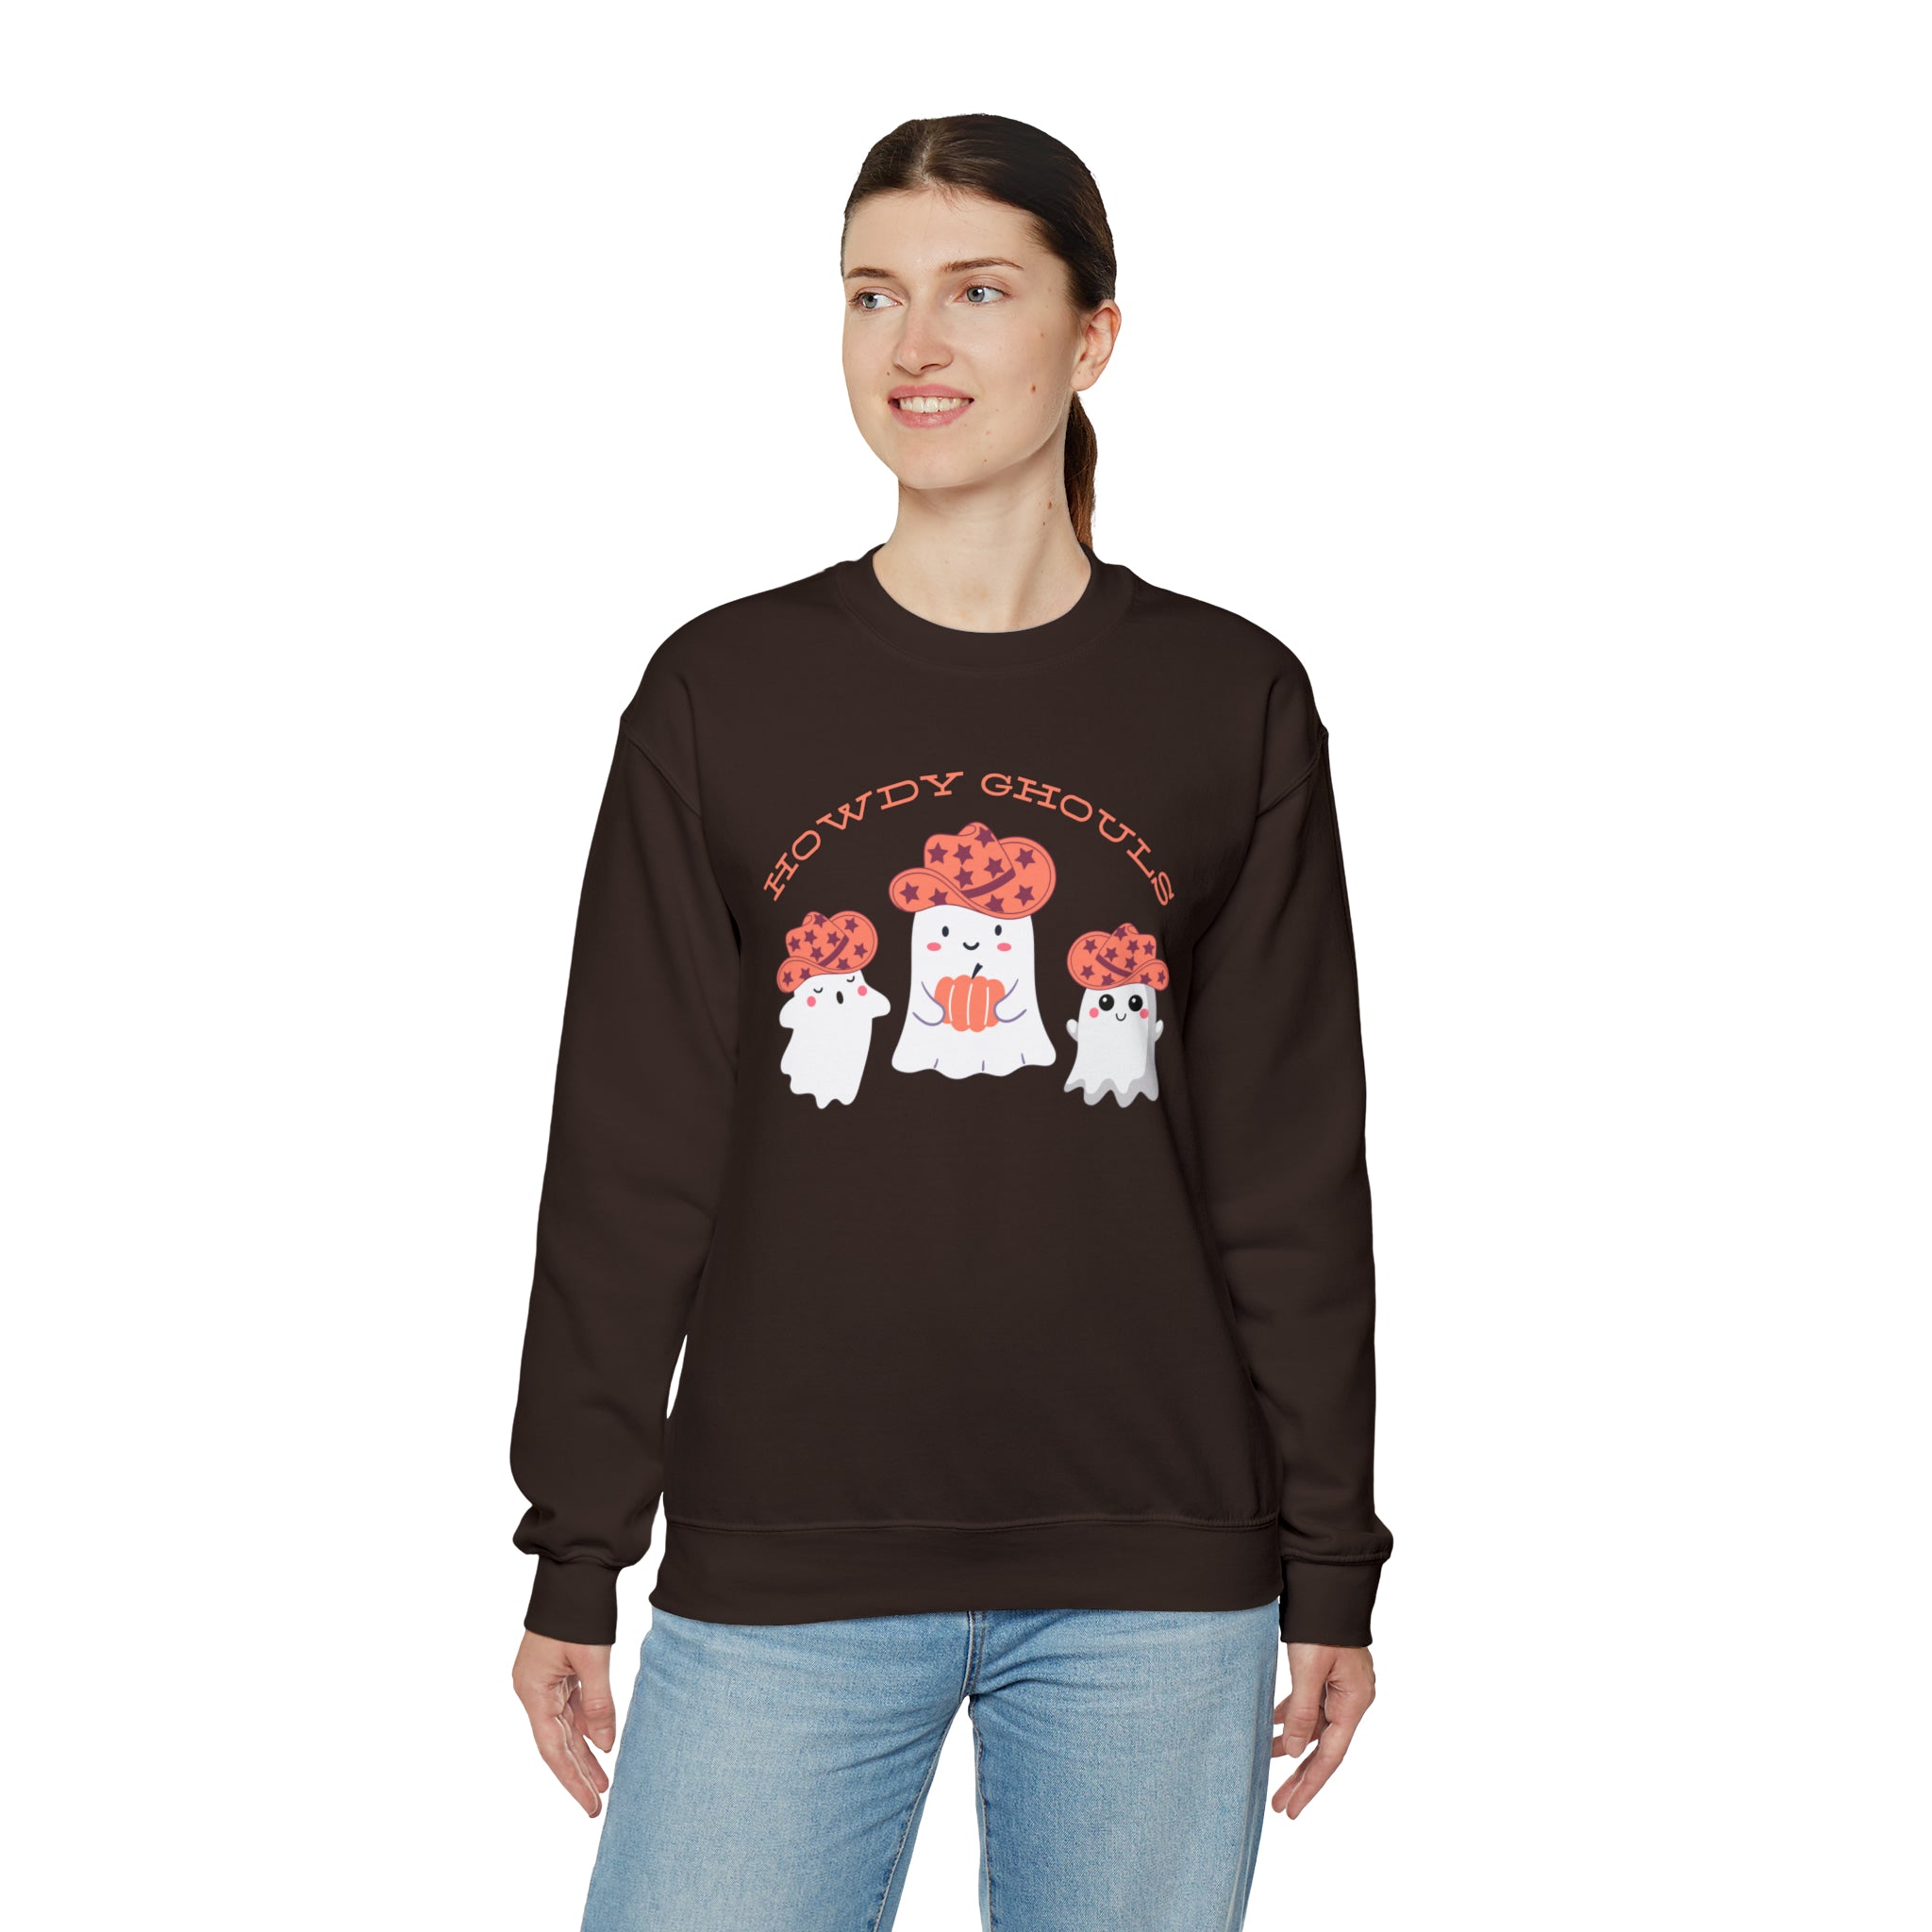 Howdy Ghouls: Spook-tacular Fall Sweatshirt for the Boo-tiful Season!